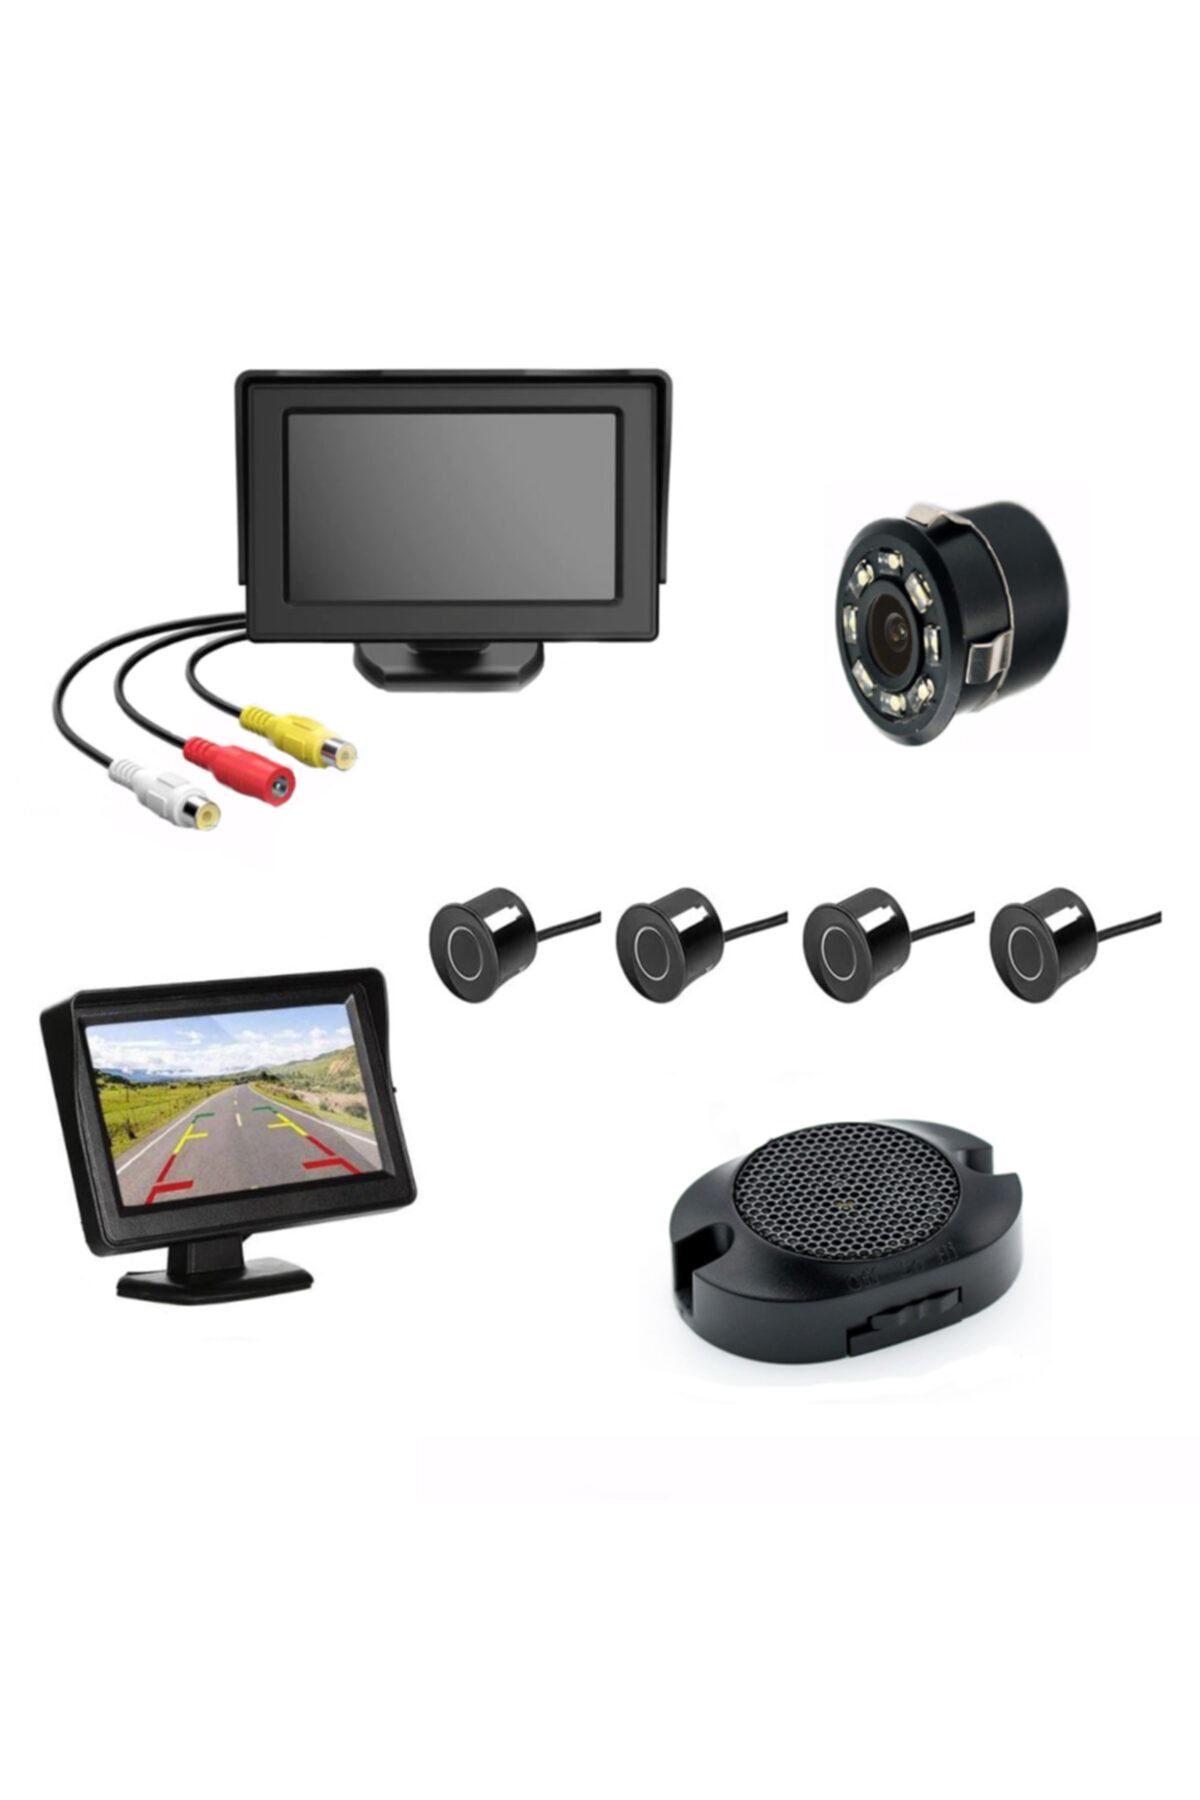 Mfk Kameralı Park Sensörü 4.3' Komple +4 Adet Siyah Sensör